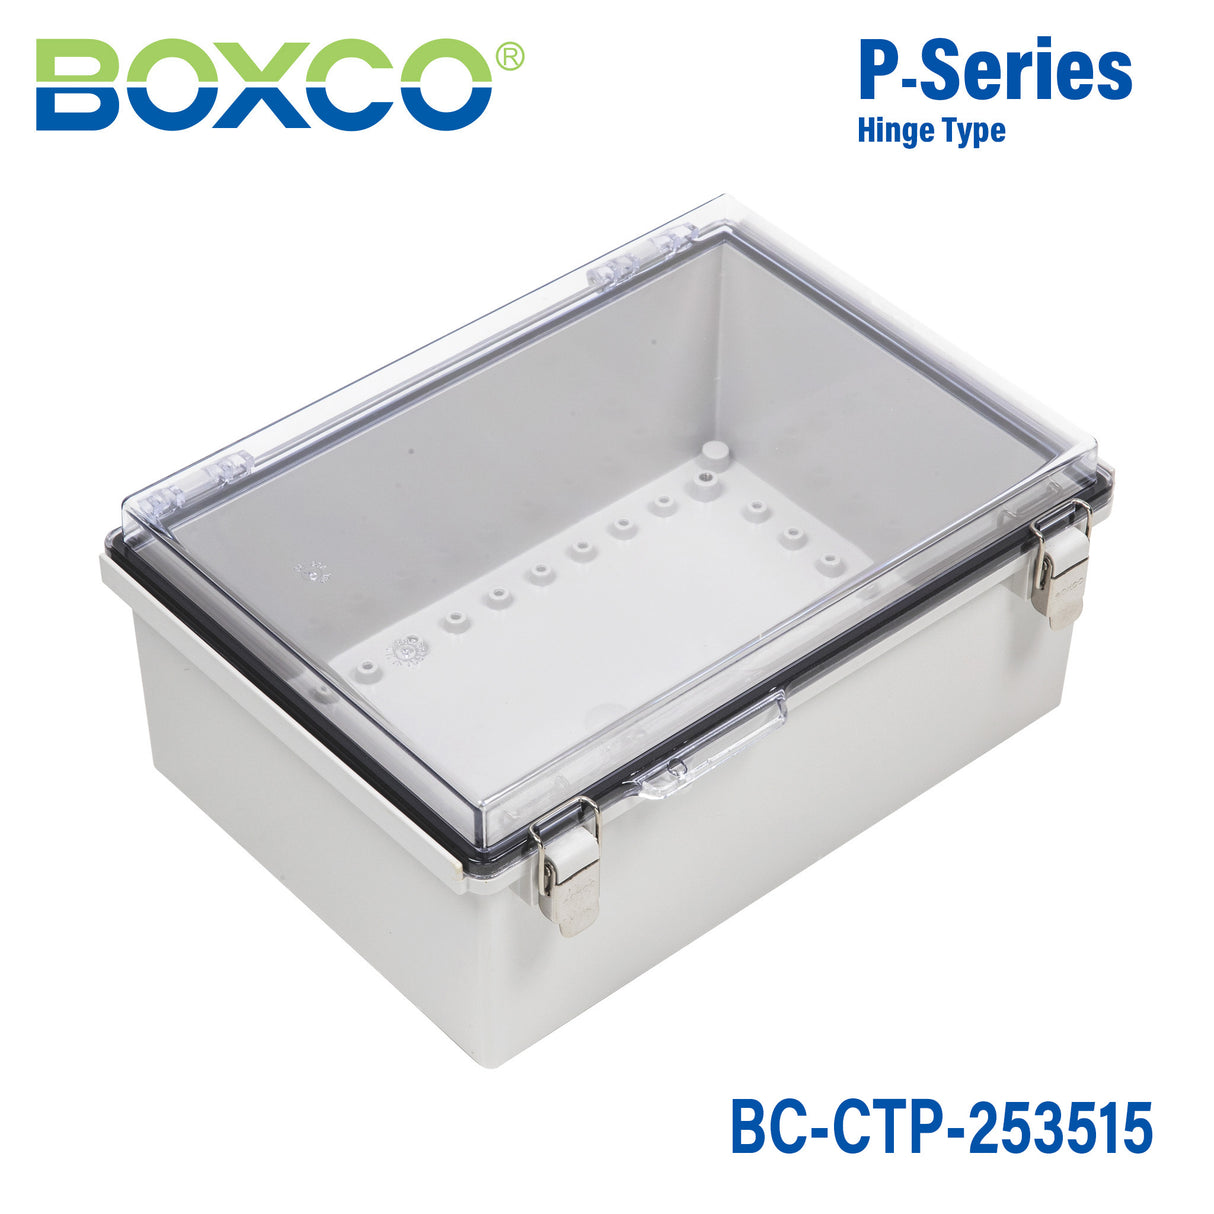 Boxco P-Series 250x350x150mm Plastic Enclosure, IP67, IK08, PC, Transparent Cover, Molded Hinge and Latch Type